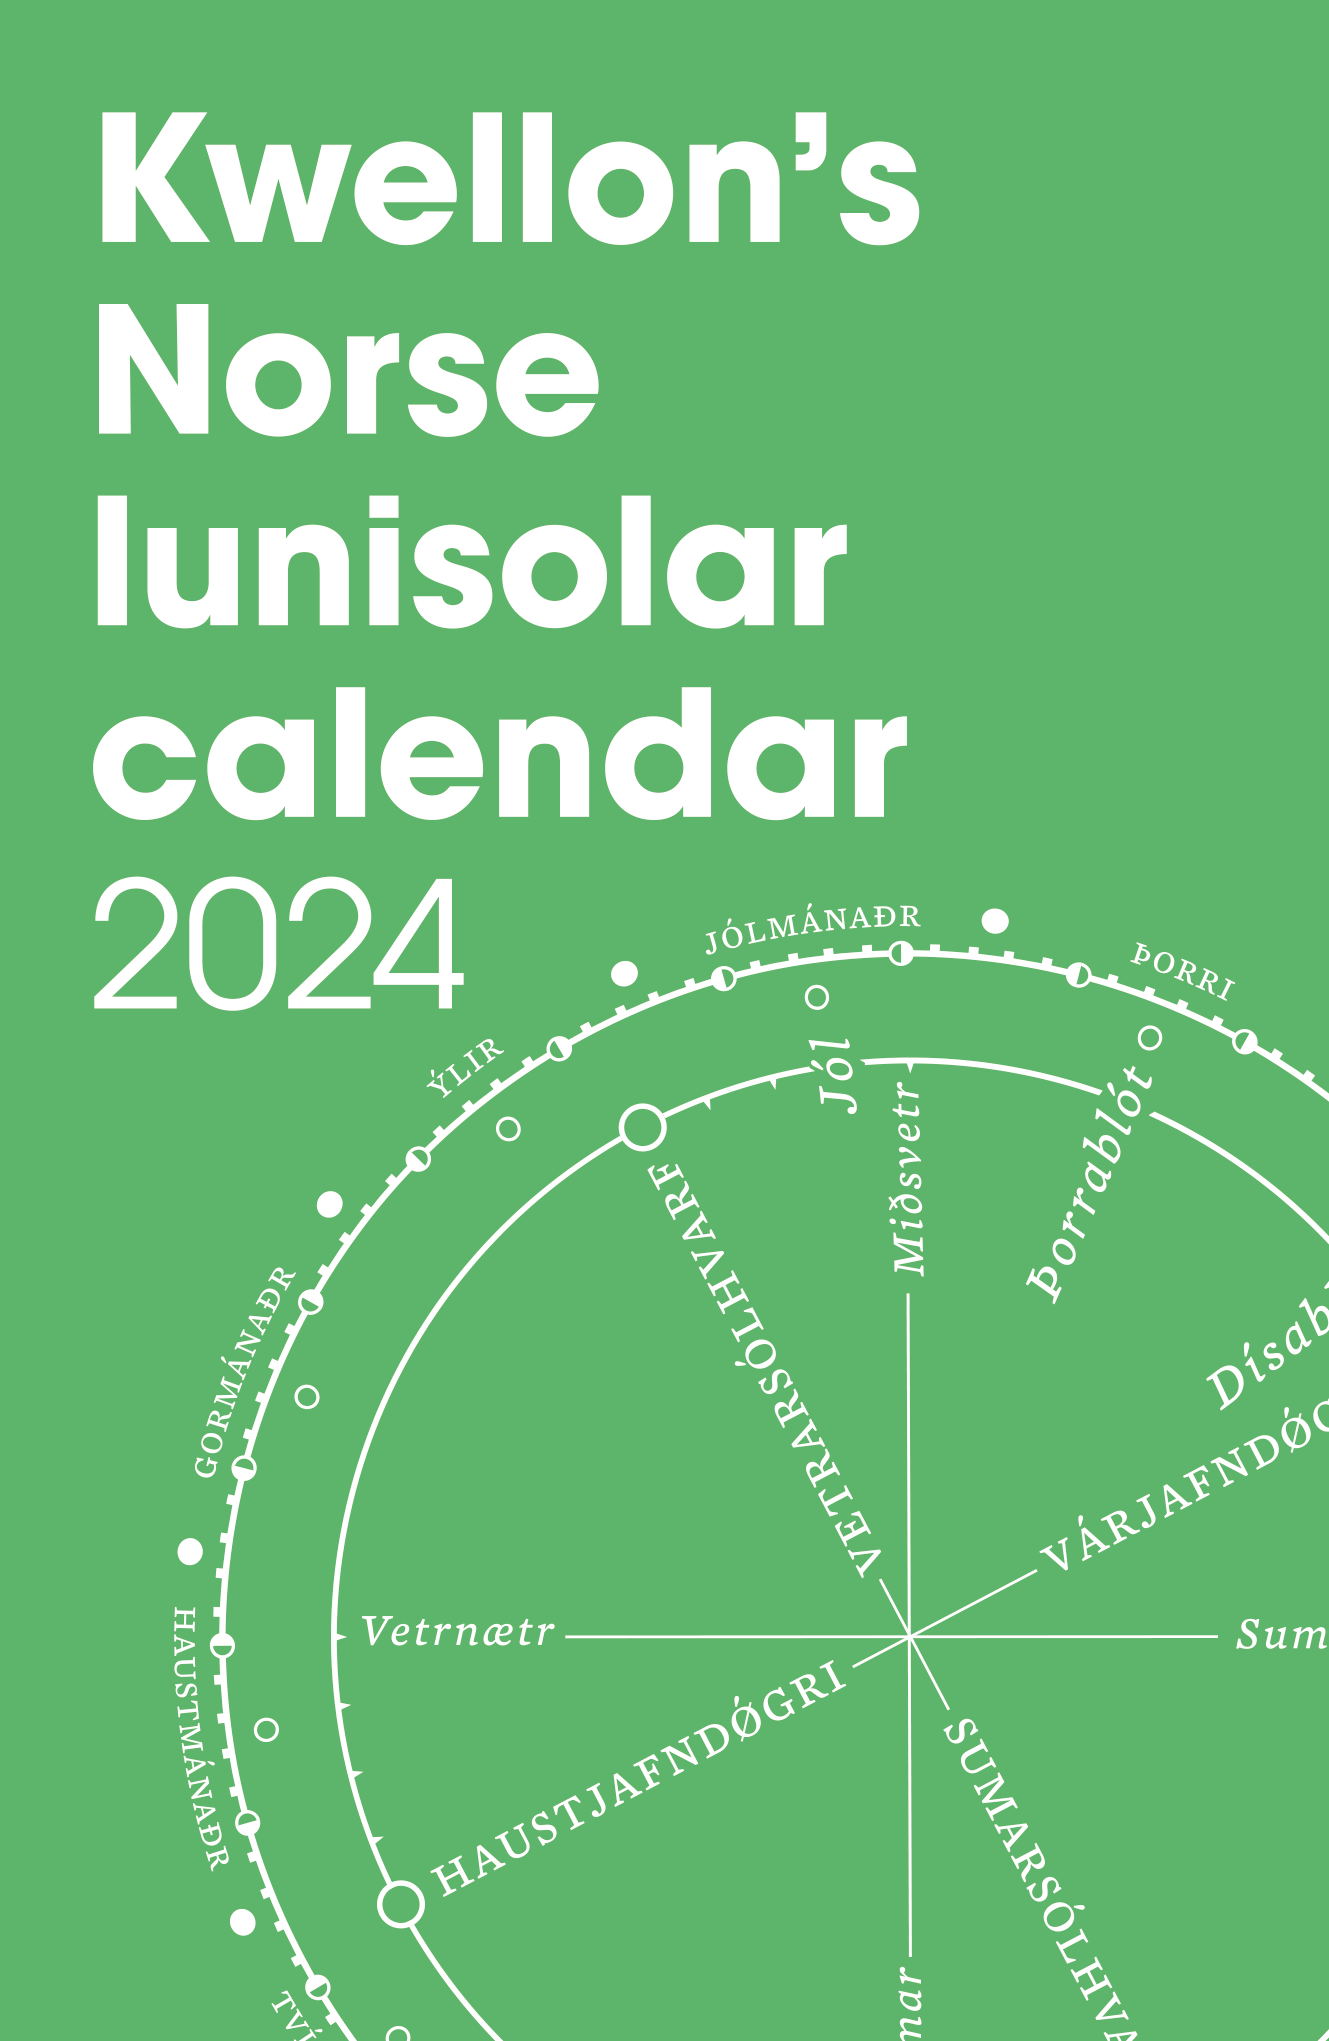 Kwellon’s Norse lunisolar calendar 2024